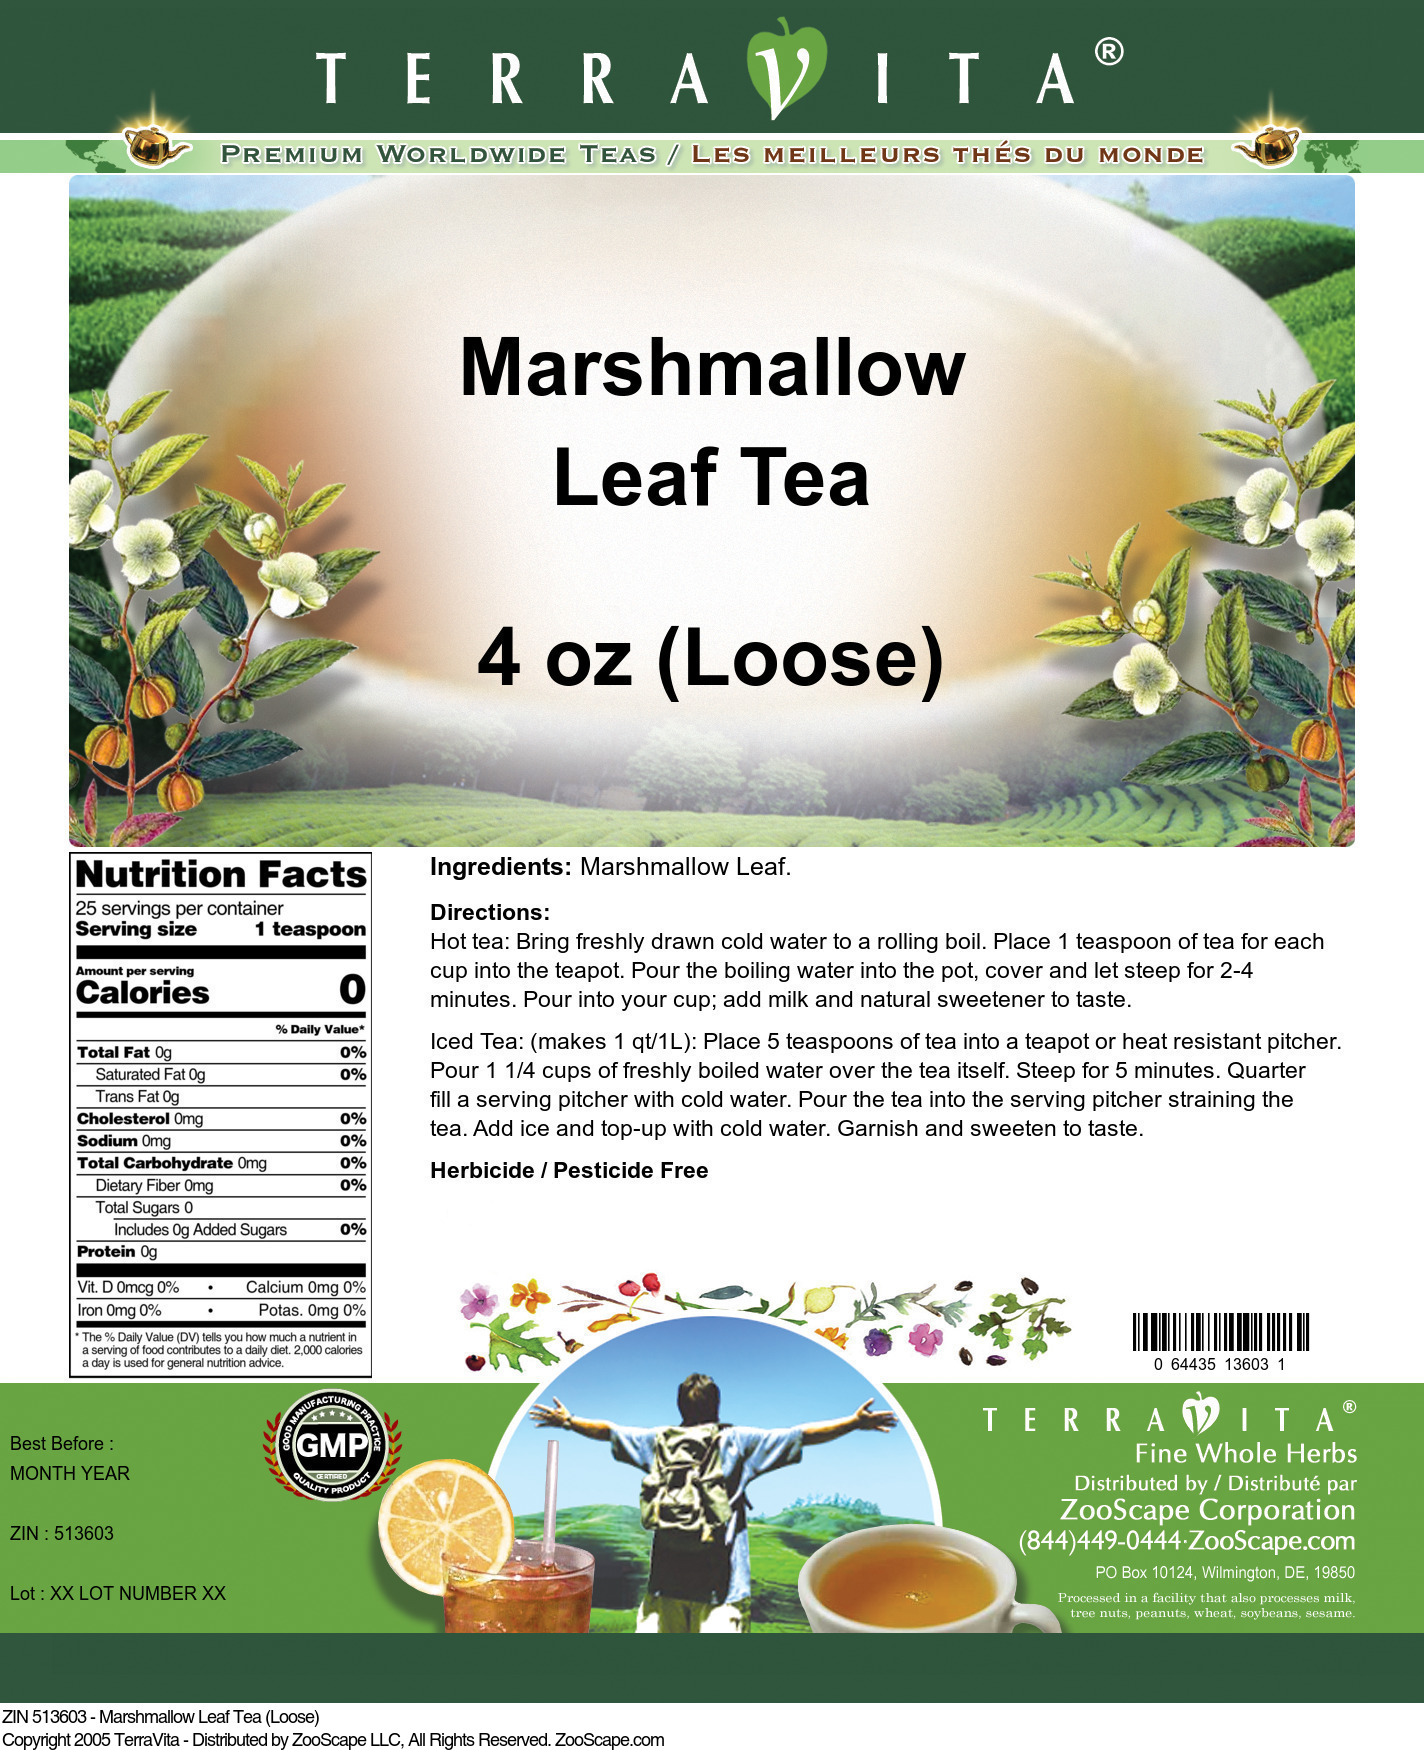 Marshmallow Leaf Tea (Loose) - Label